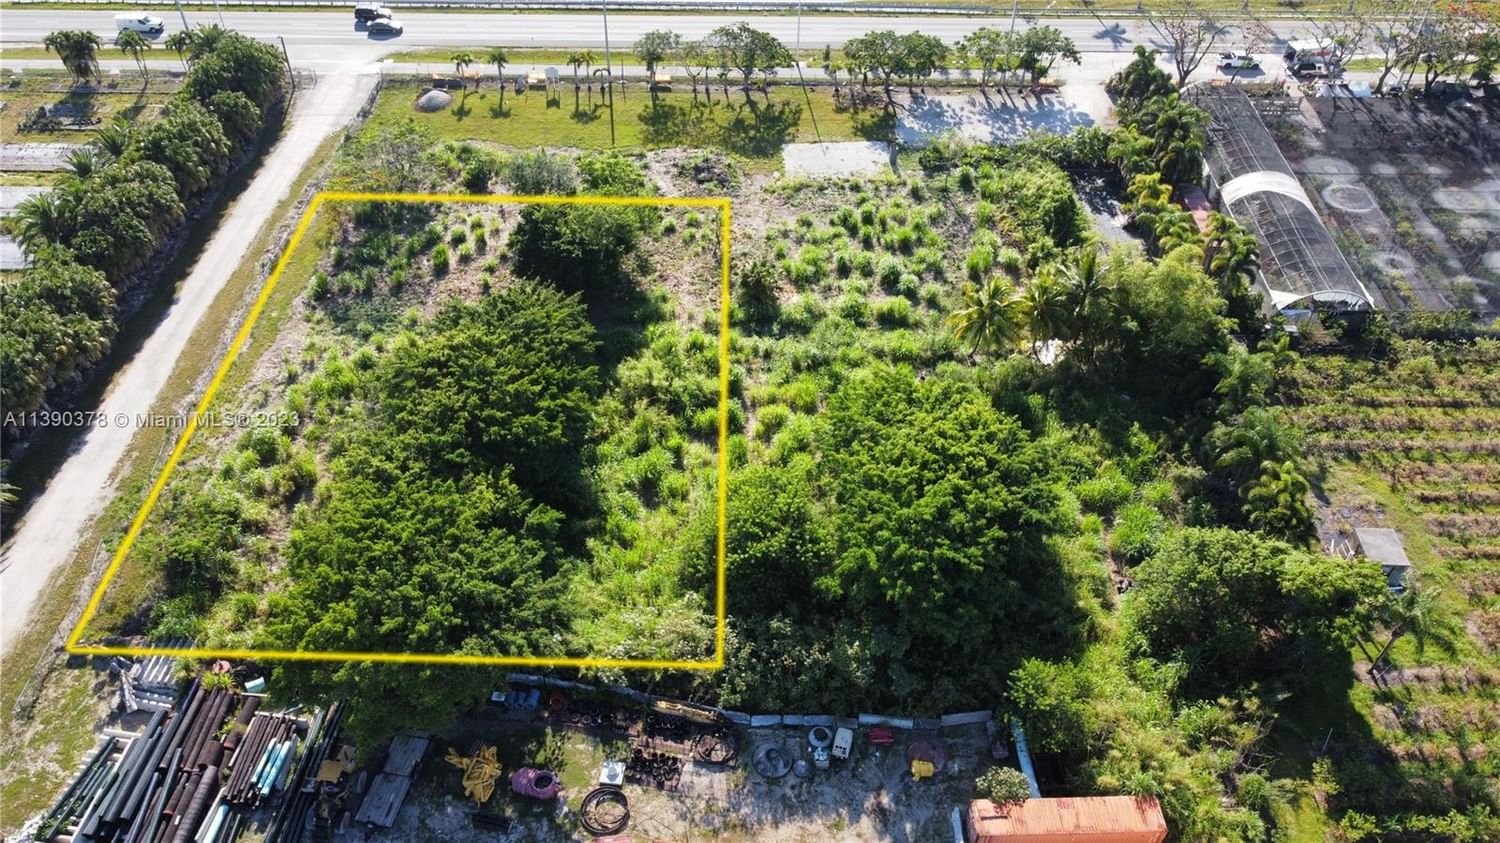 Real estate property located at 153xx 177 ave (Krome), Miami-Dade County, Miami, FL